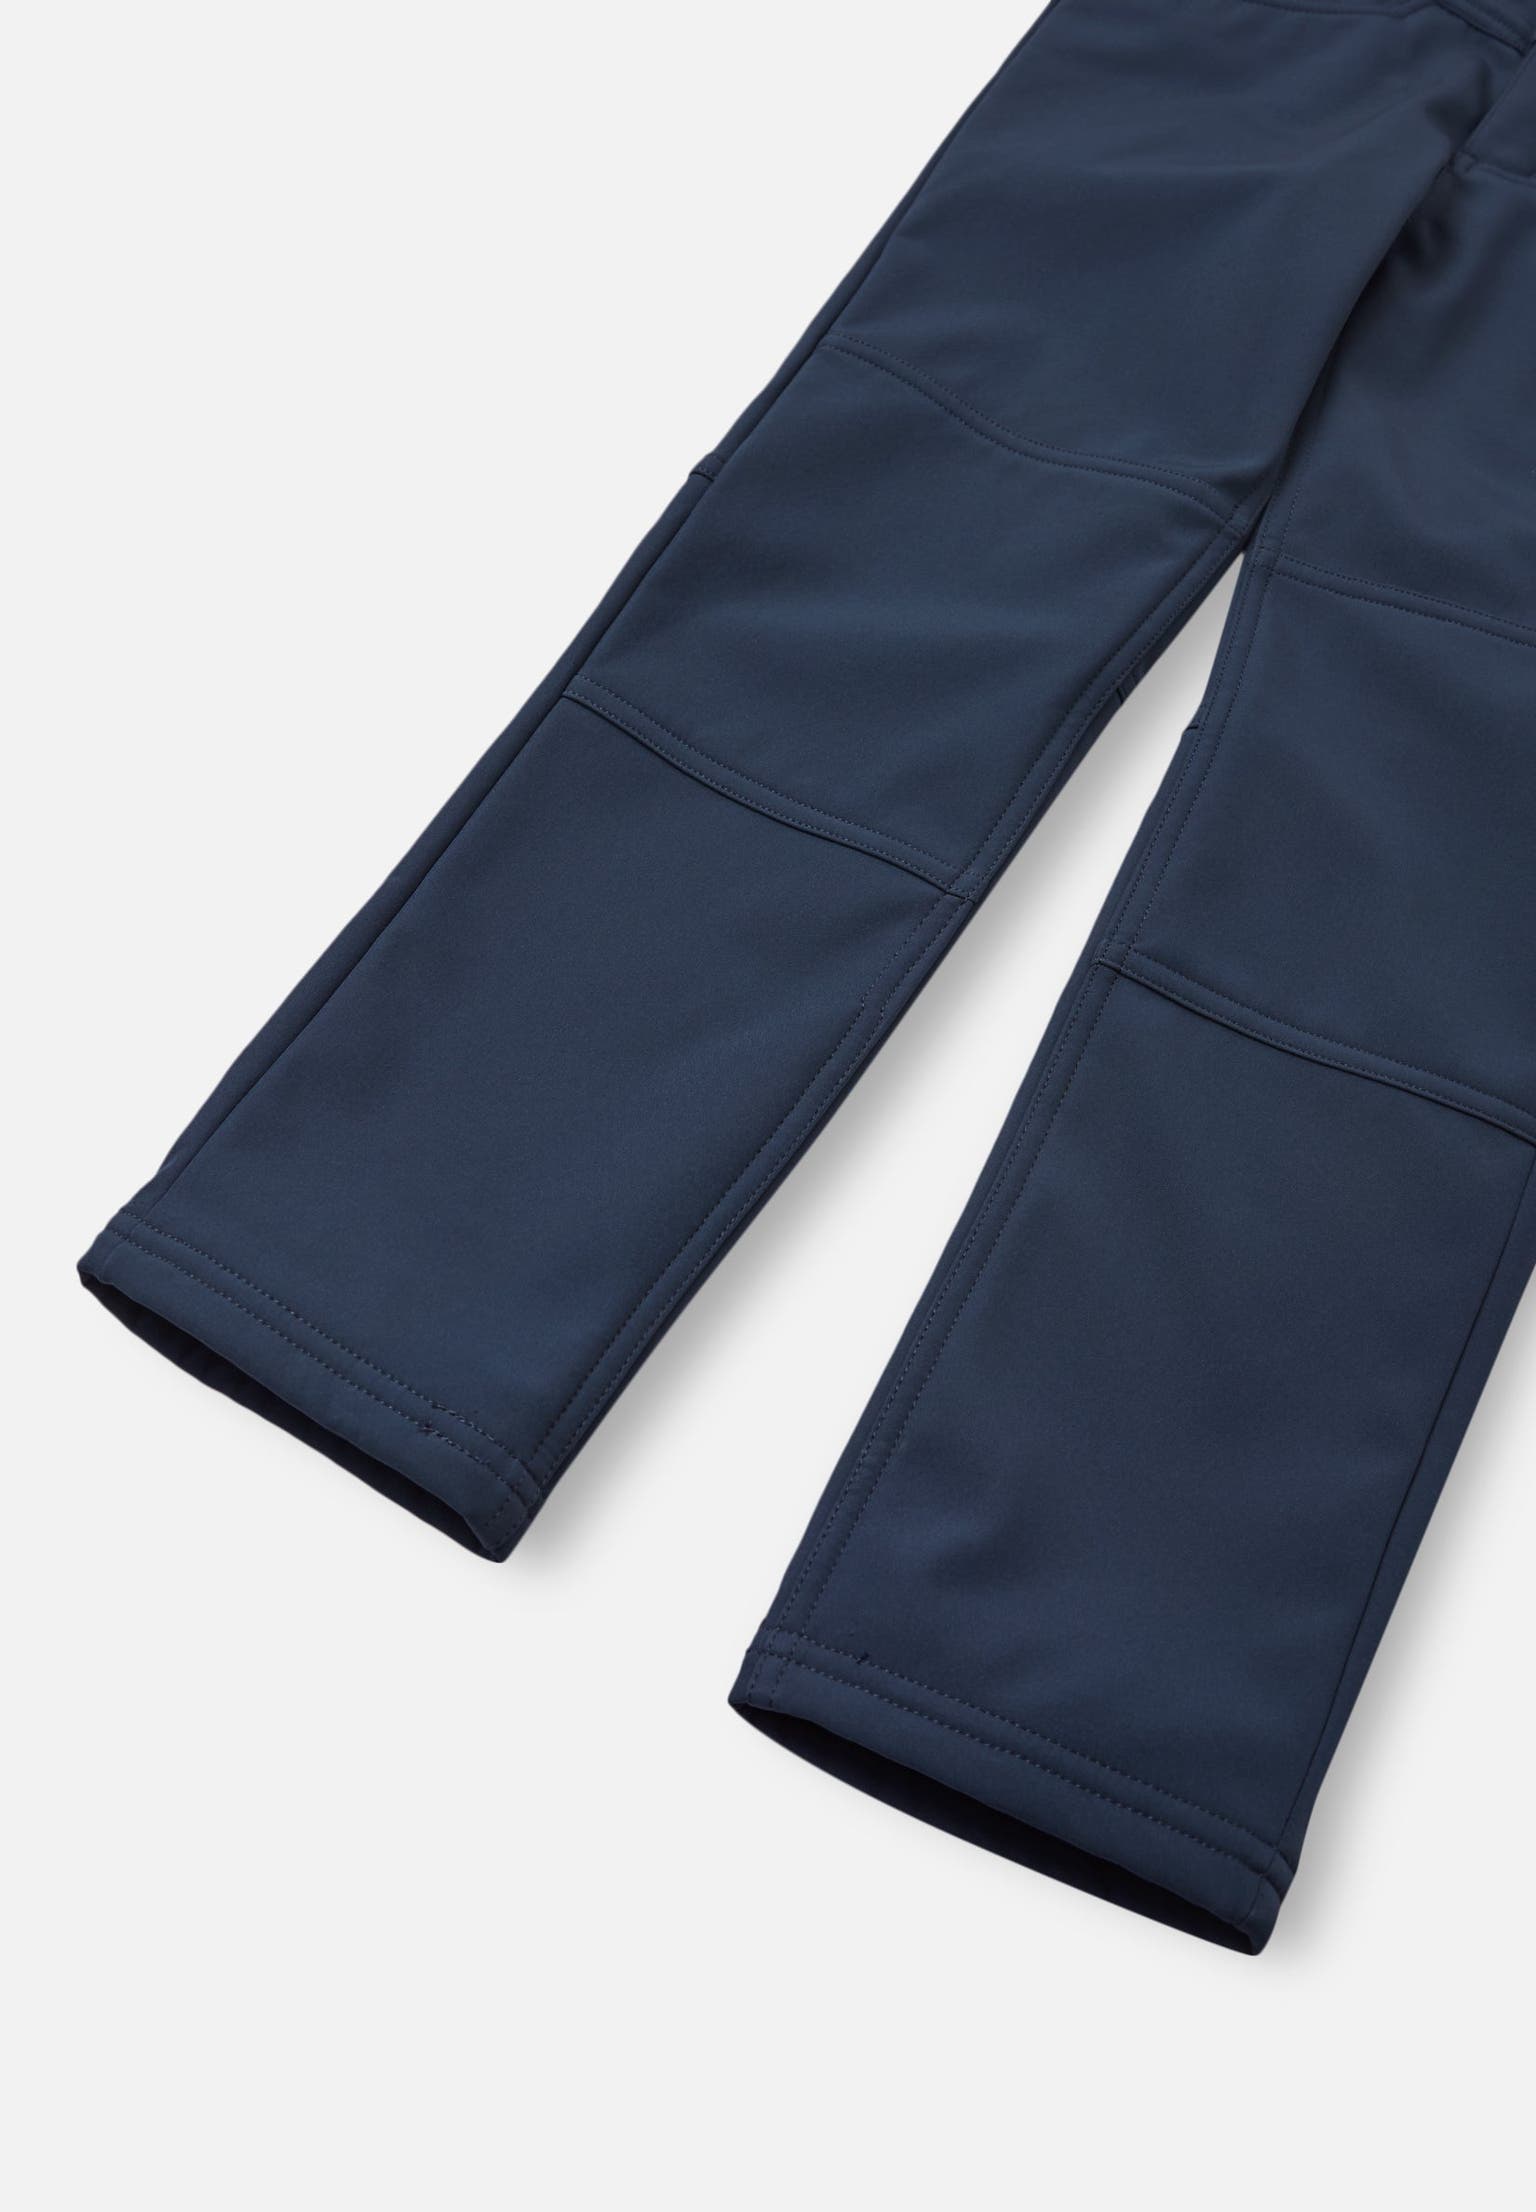 Reima Softshell Fleece-Lined Outdoor Pants - Mighty